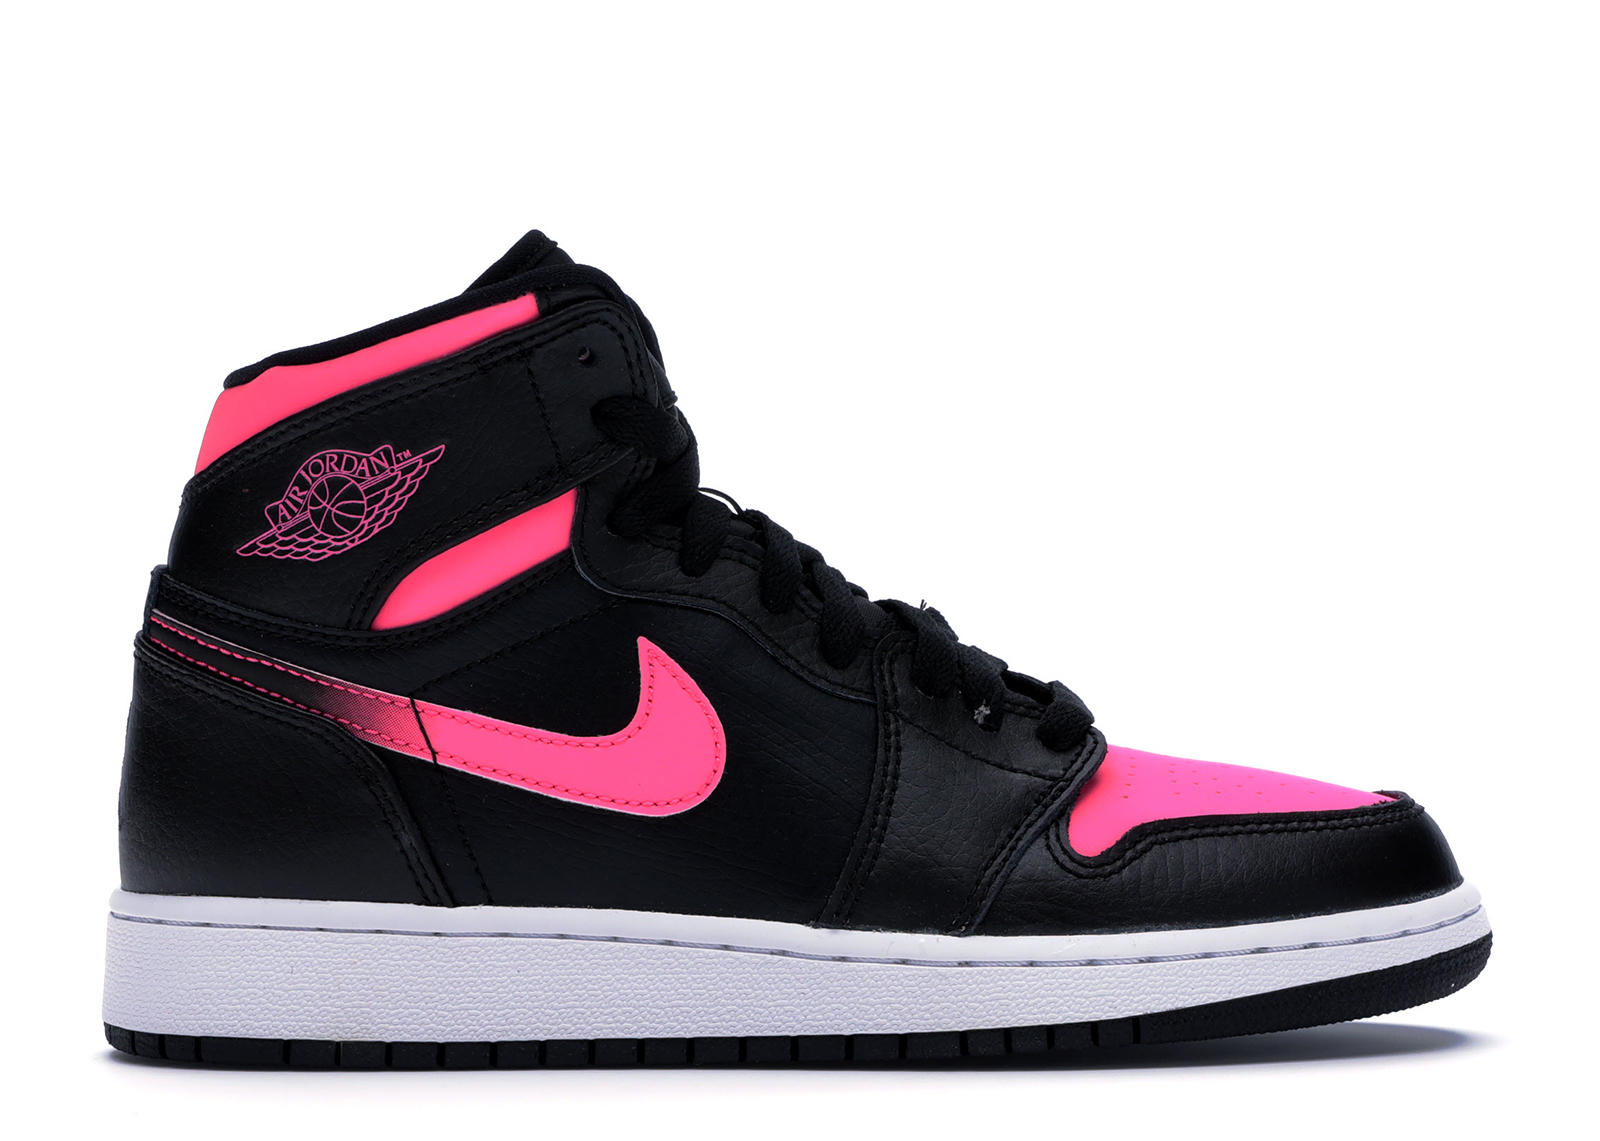 Jordan Jordan 1 Retro High Black Hyper Pink (GS) 332148-019 from 207,00